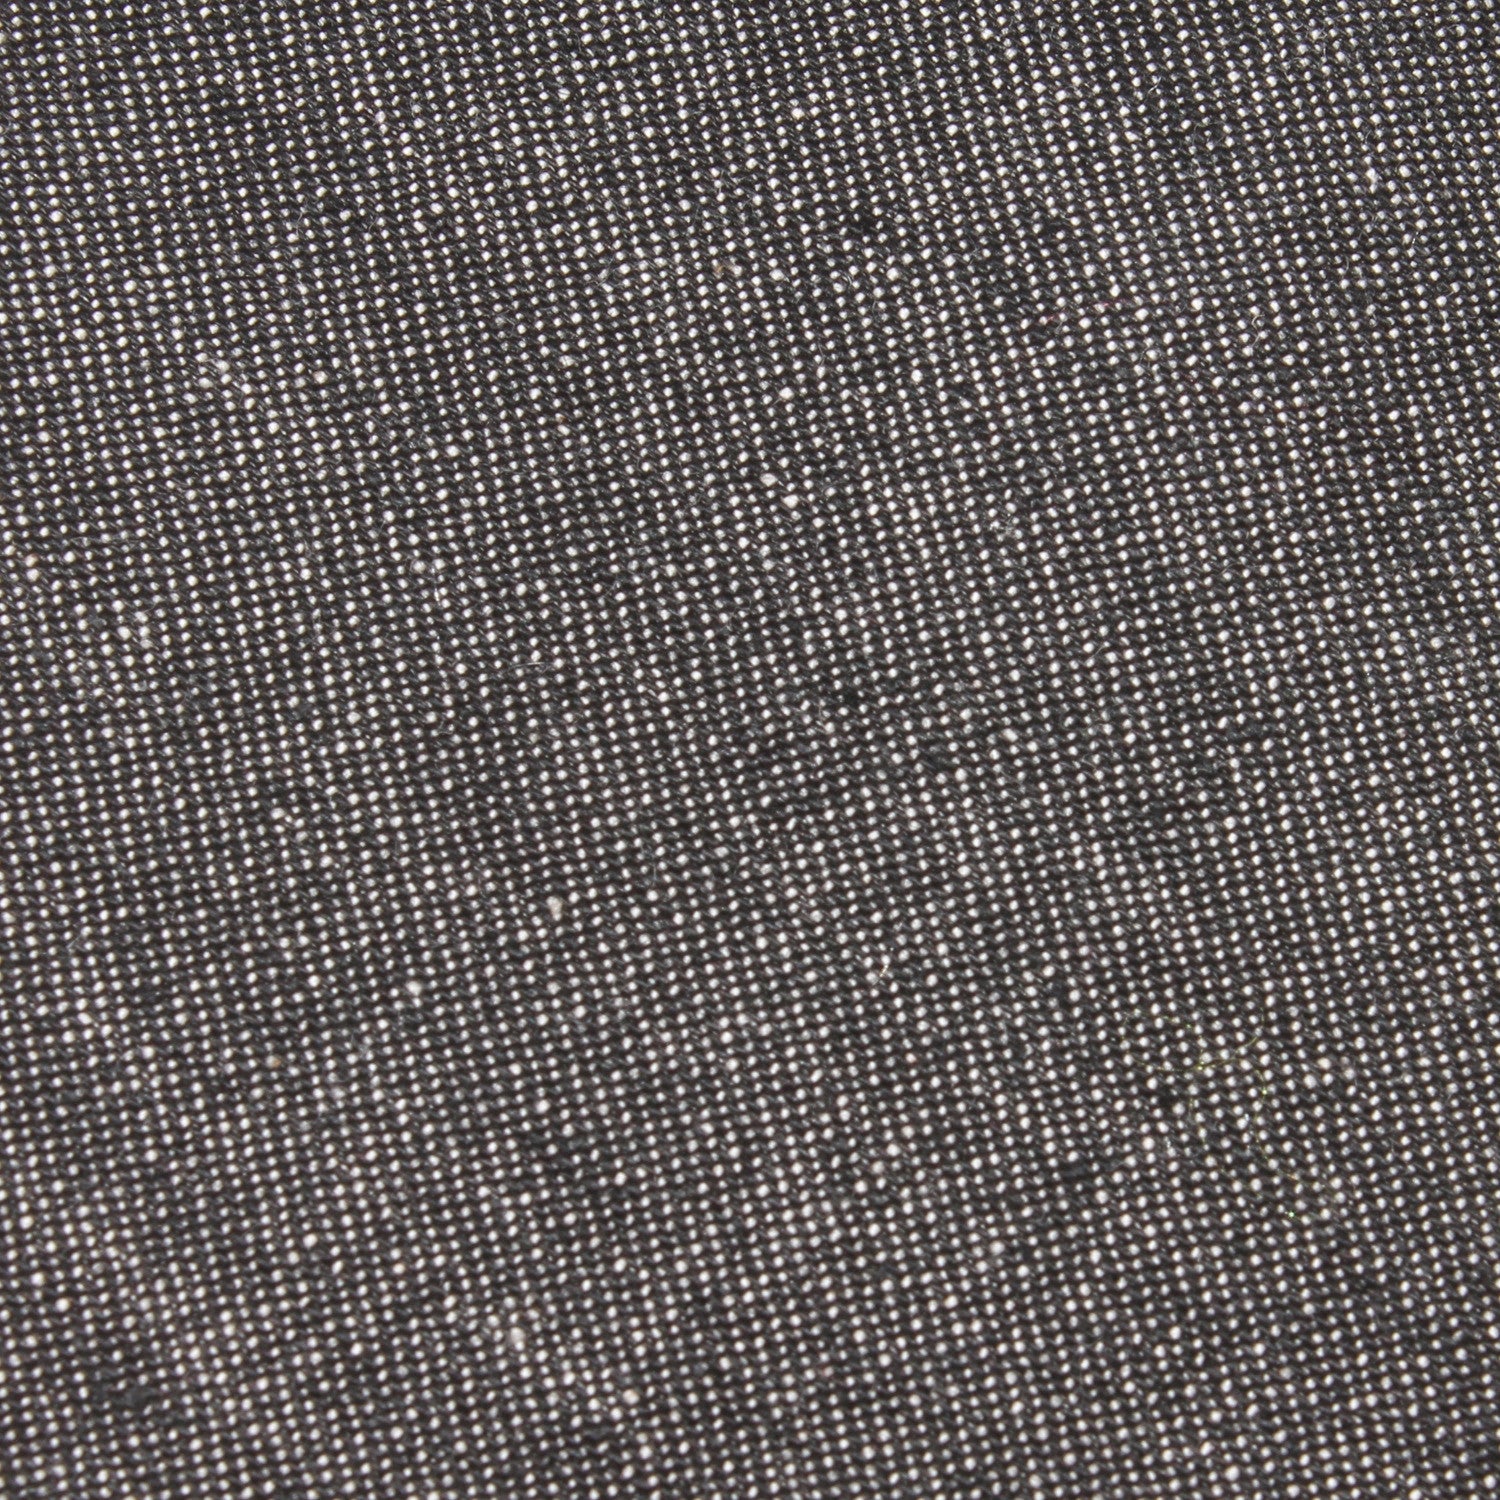 Black Denim Jeans Cotton Fabric Skinny Tie C043